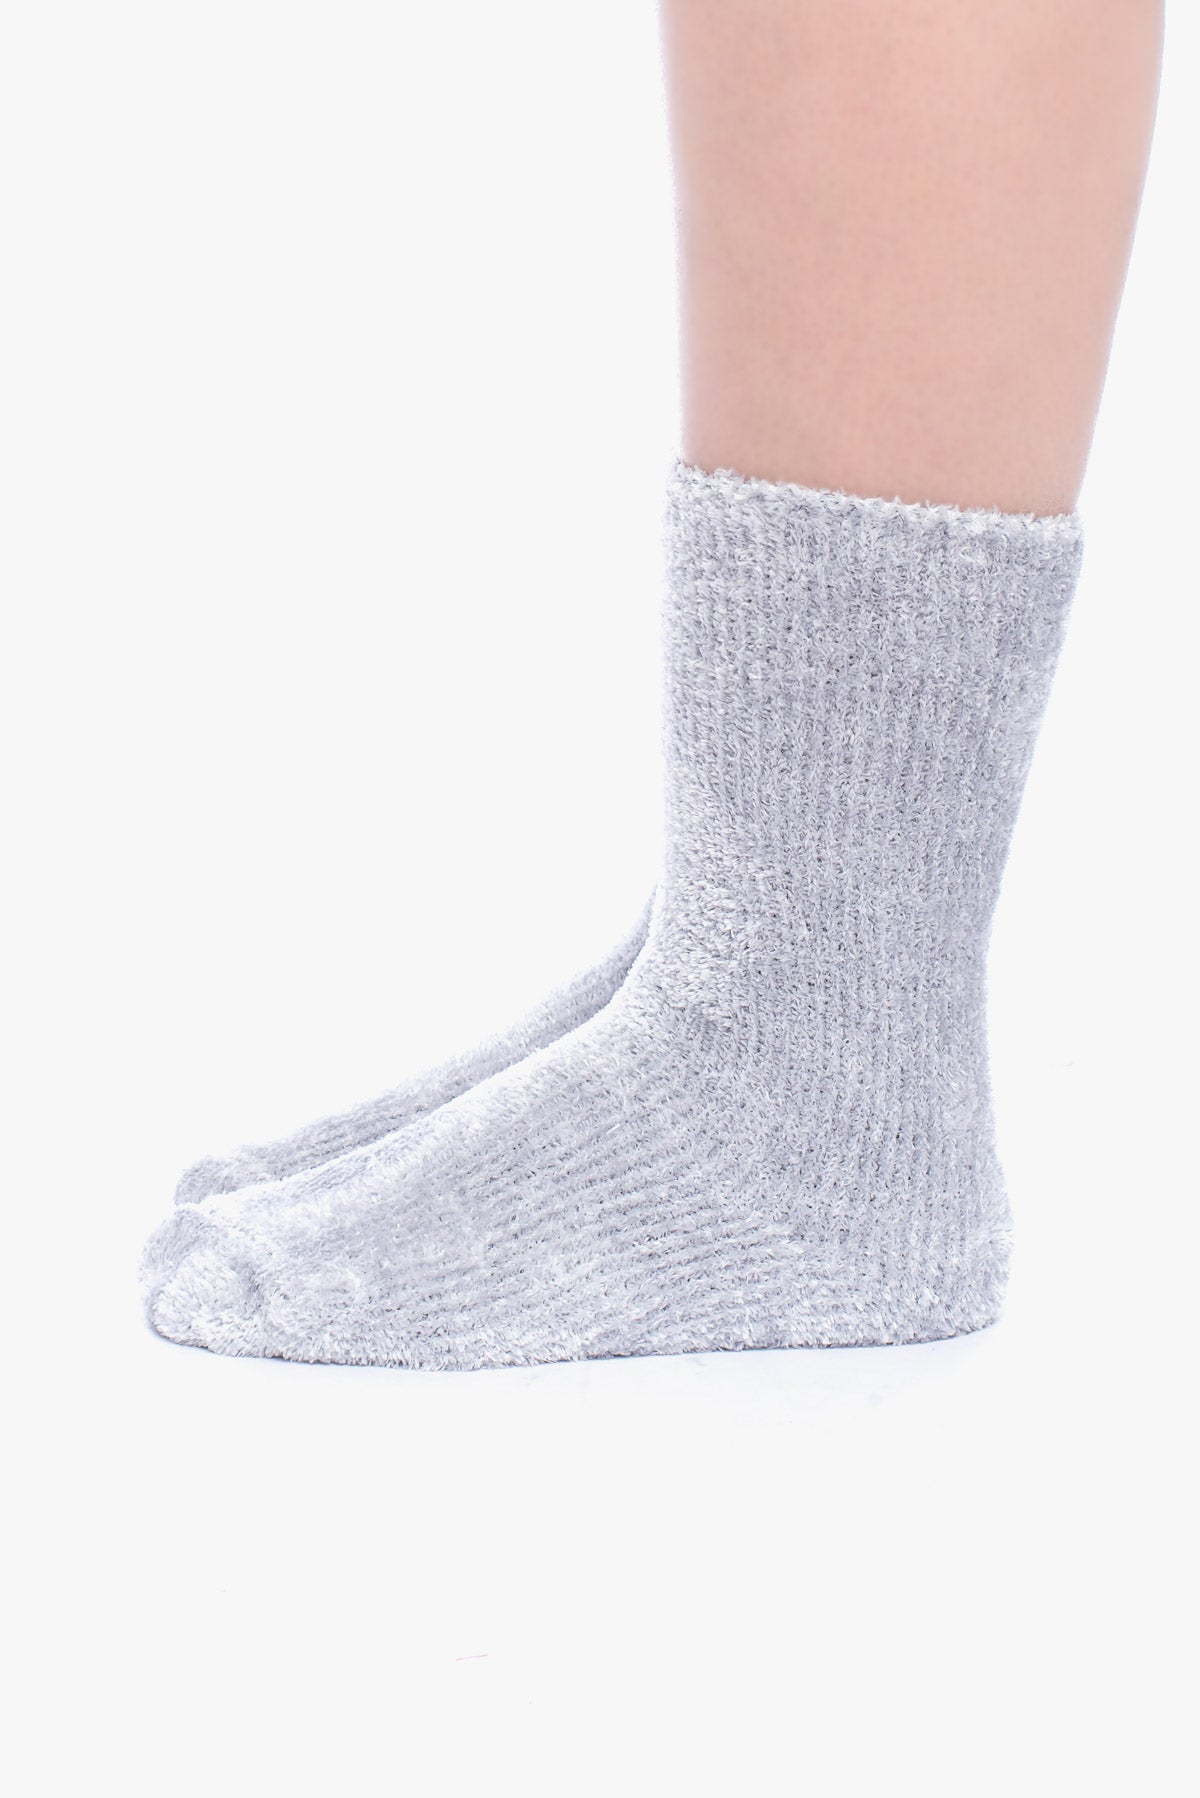 SIMONE 2 grey & blue socks